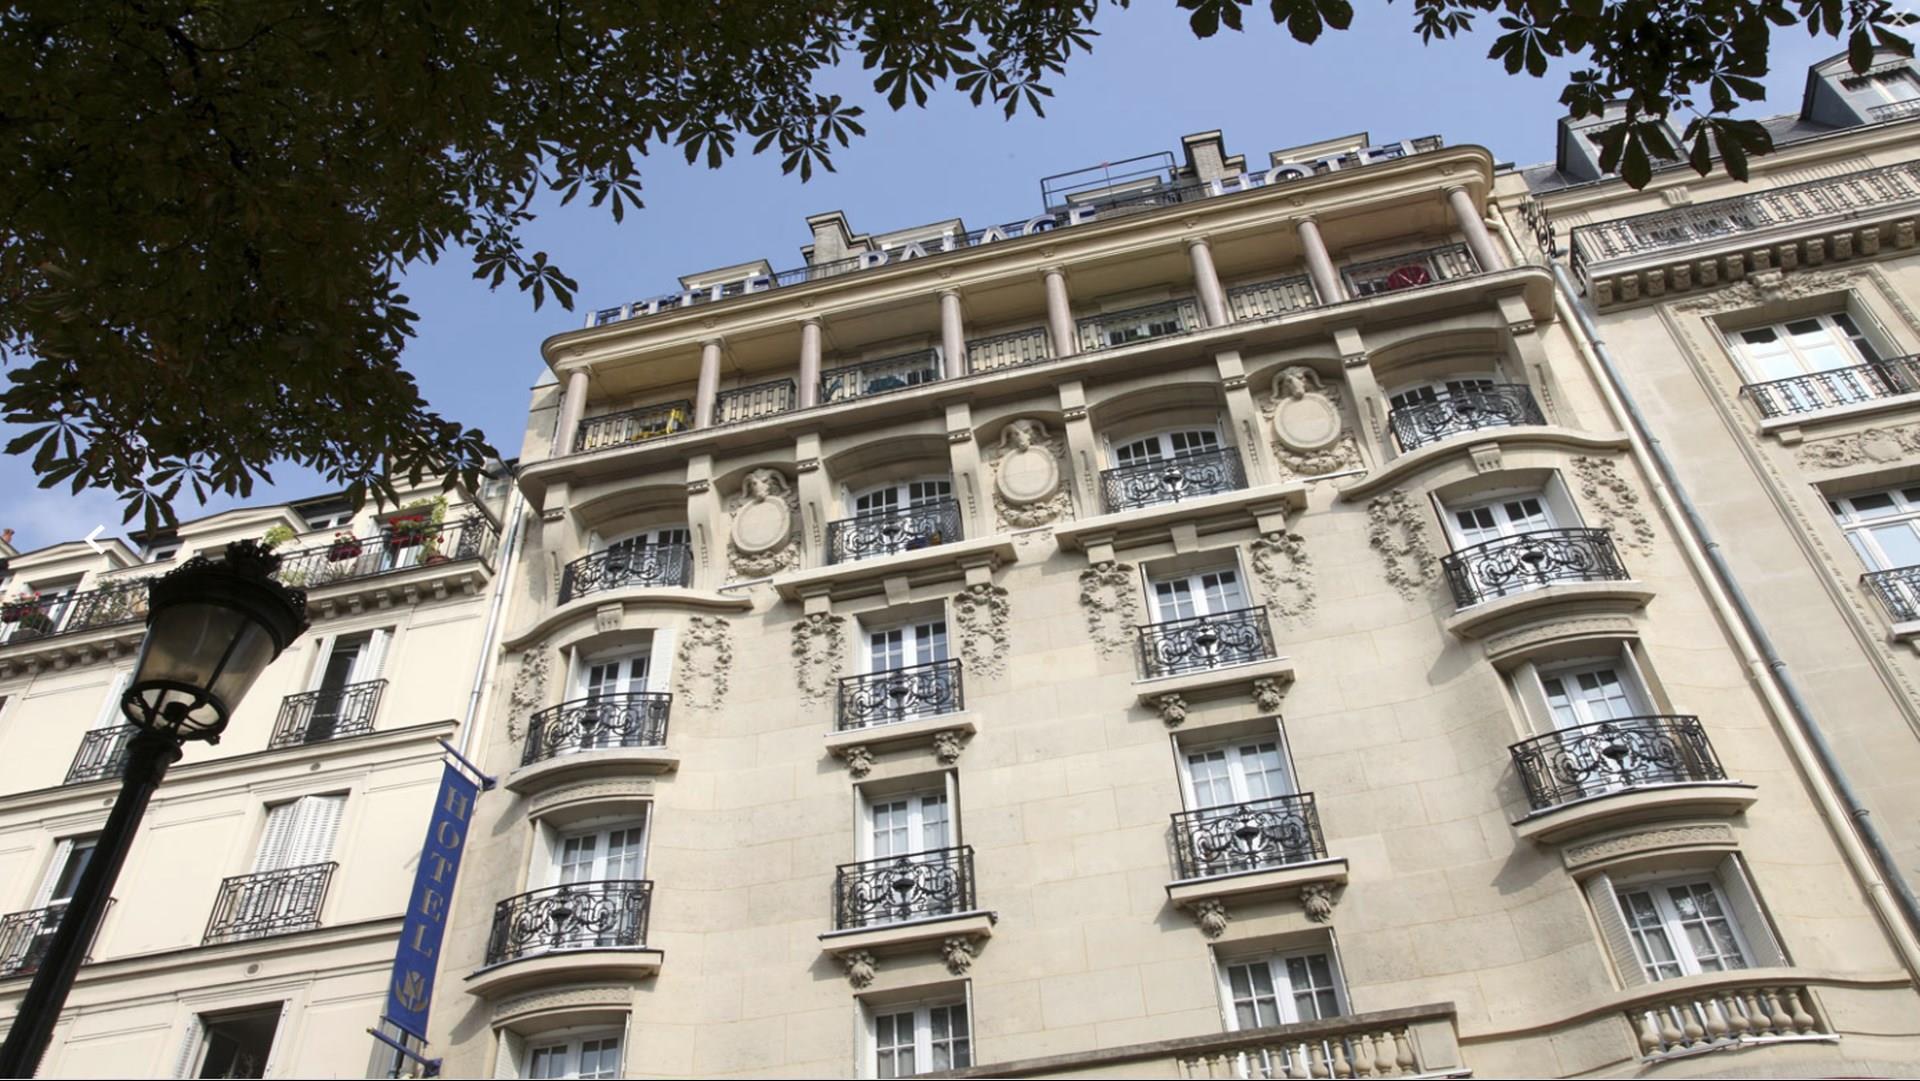 Little Palace Hotel in Paris, FR